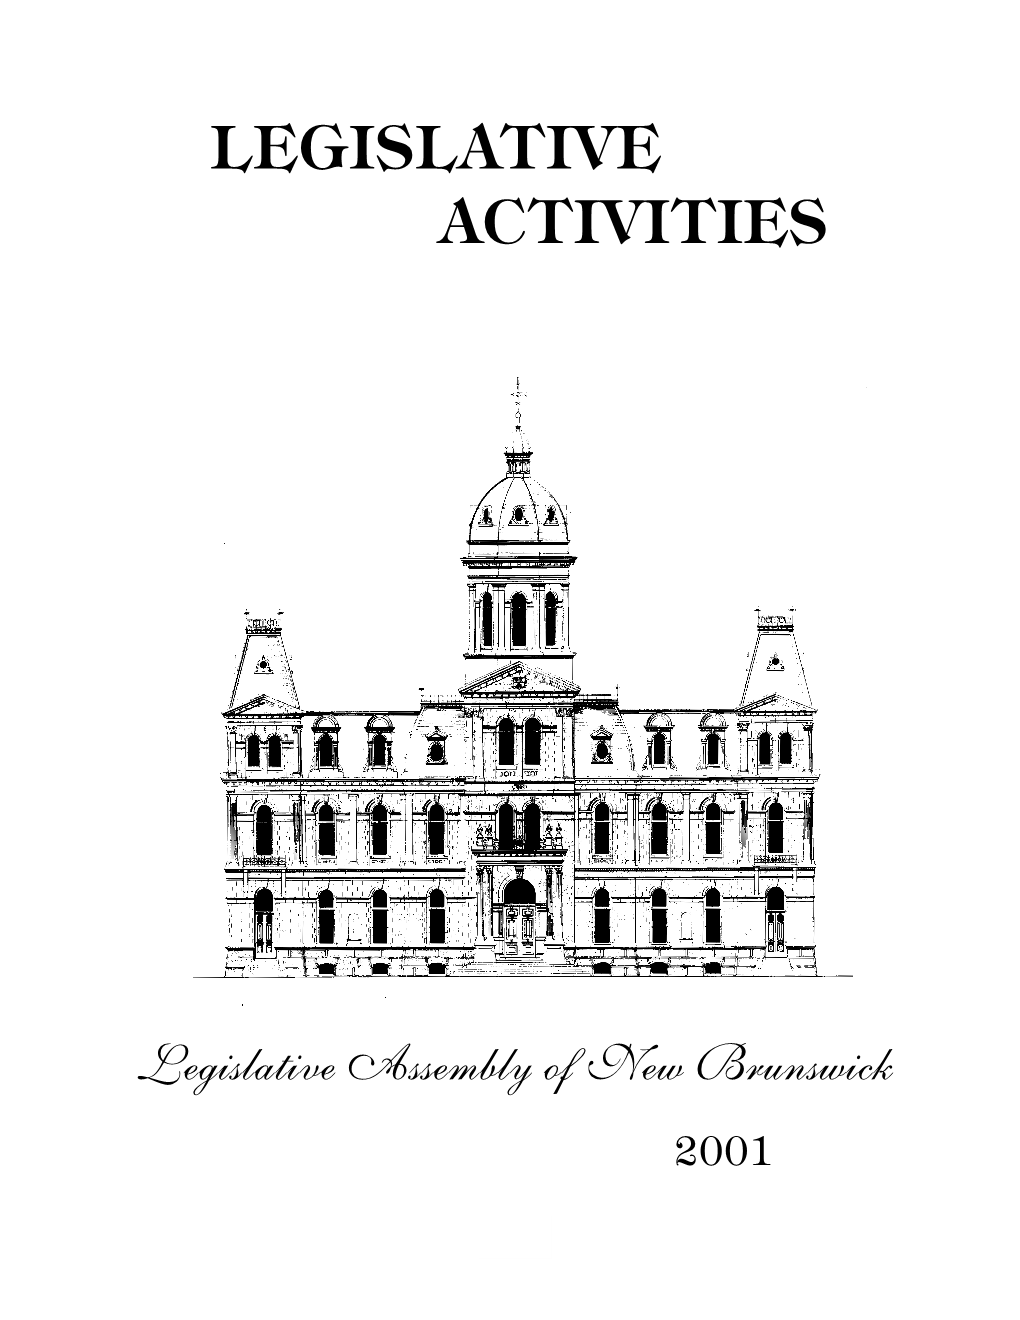 Legislative Assembly of New Brunswick, Legislative Activities, 2001